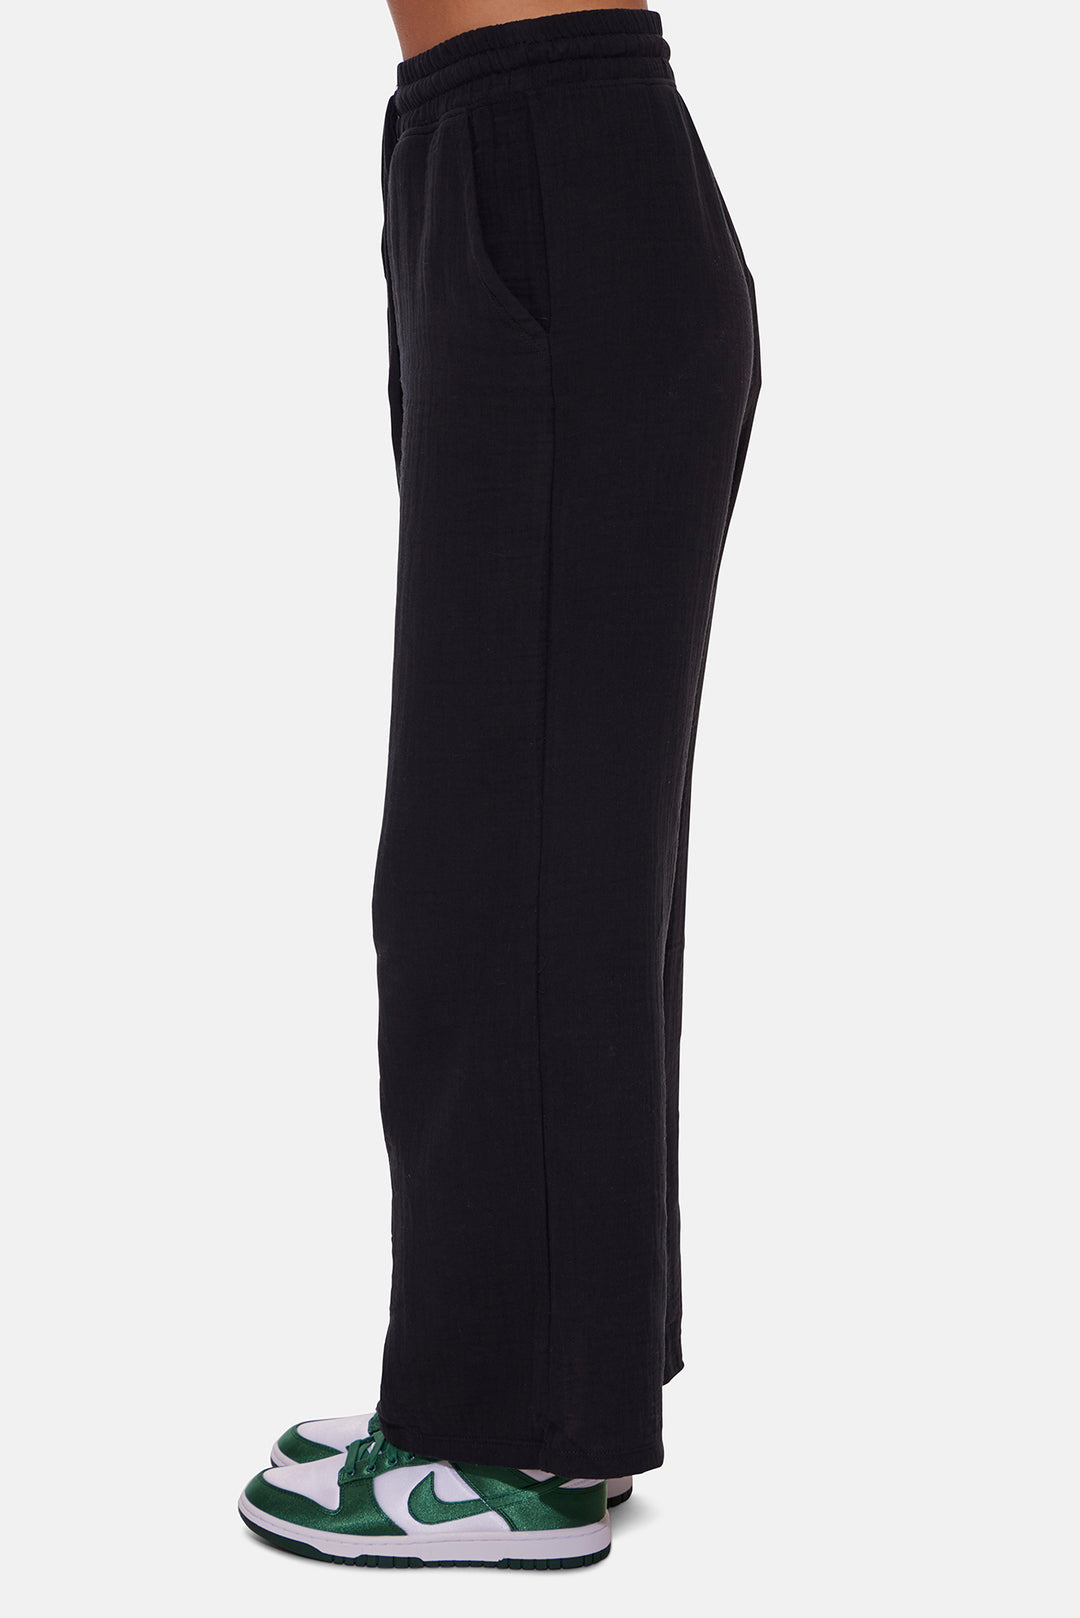 Wendy Gauze Wide Leg Pant Black